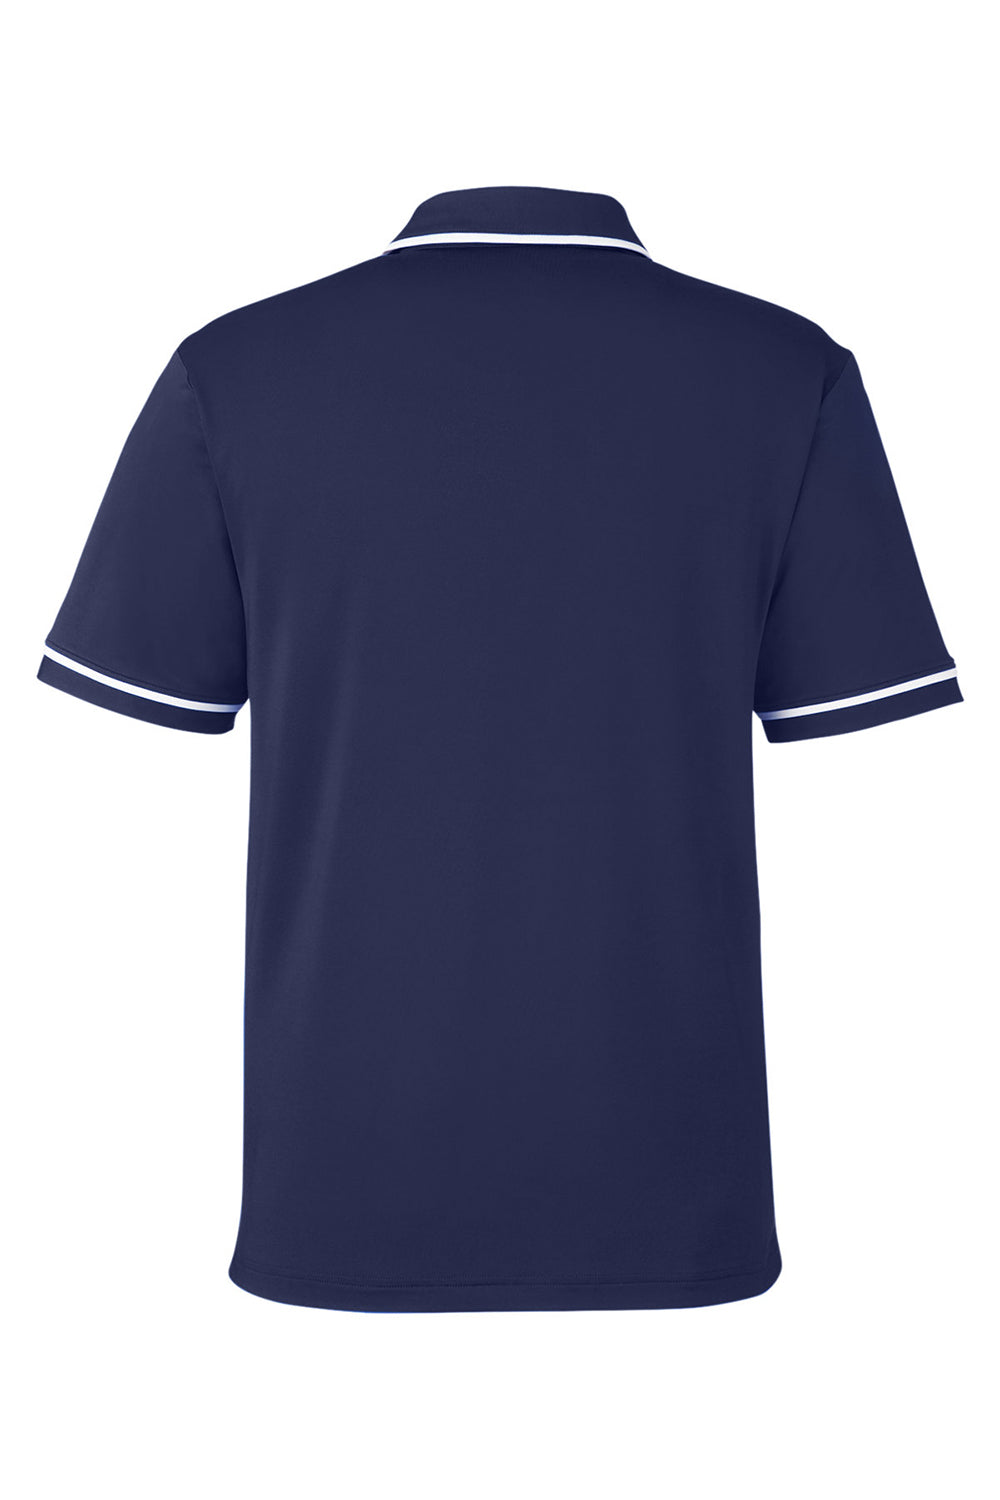 Under Armour 1376904 Mens Teams Performance Moisture Wicking Short Sleeve Polo Shirt Midnight Navy Blue Flat Back